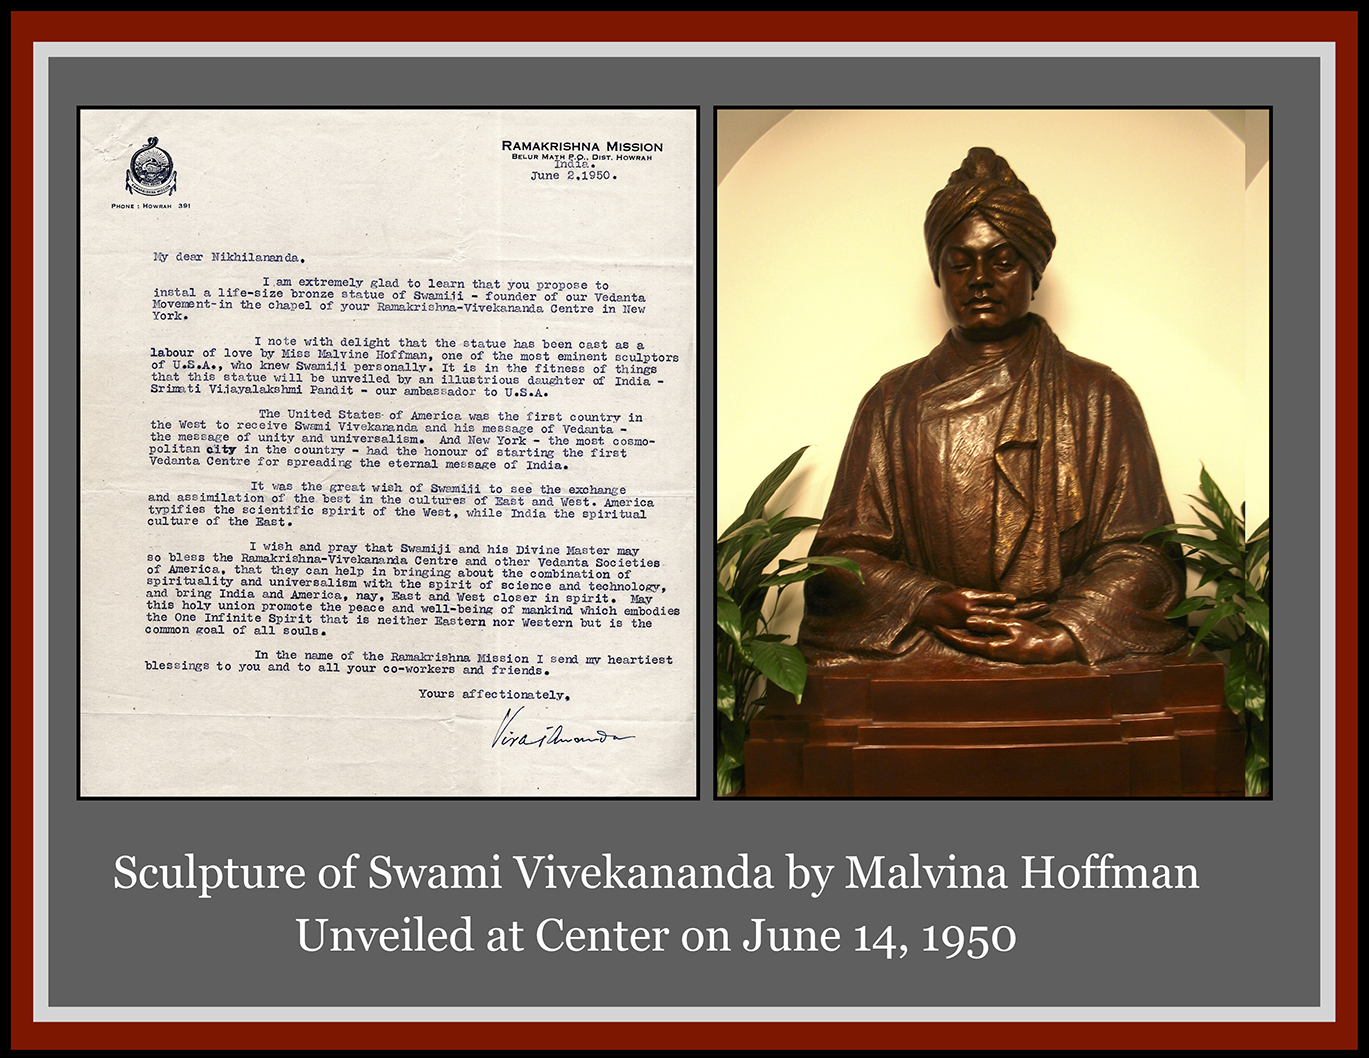 Sculpture of Swami Vivekananda by Malvina Hoffman.